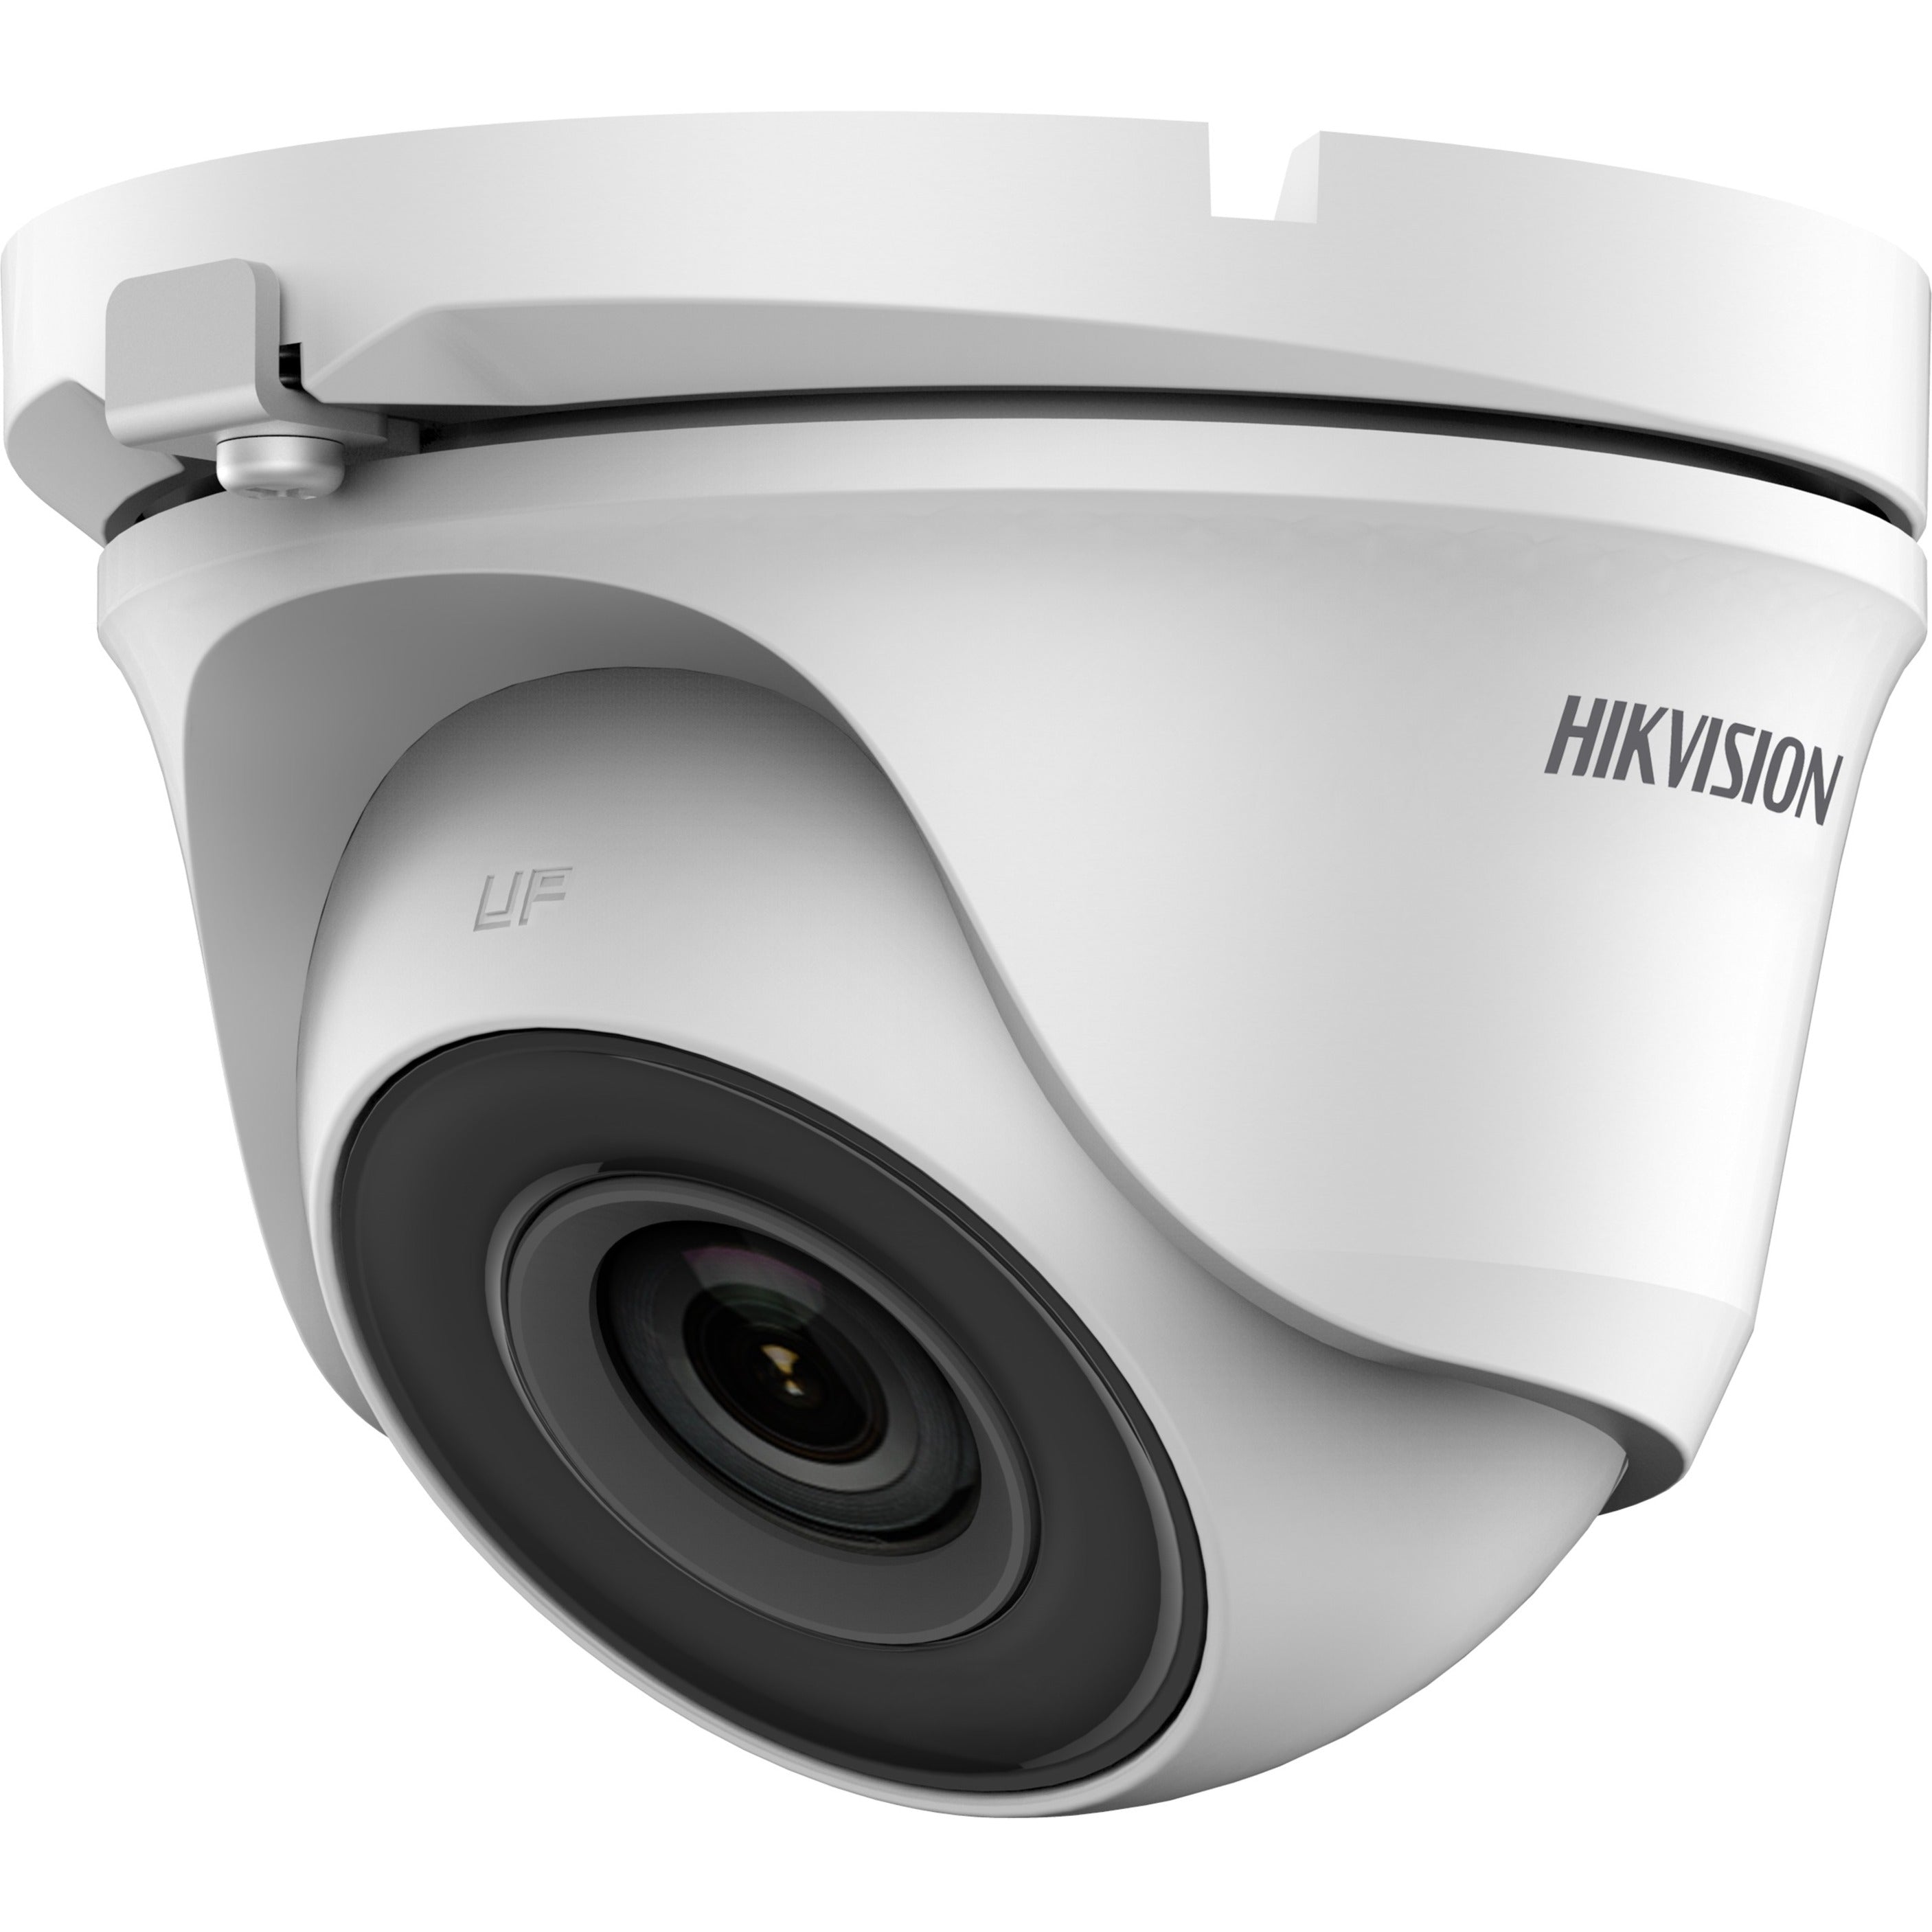 Hikvision ECT-T12F2 Turbo HD 2MP TVI IR Surveillance Camera, Outdoor, 2.8mm Lens, Full HD Recording